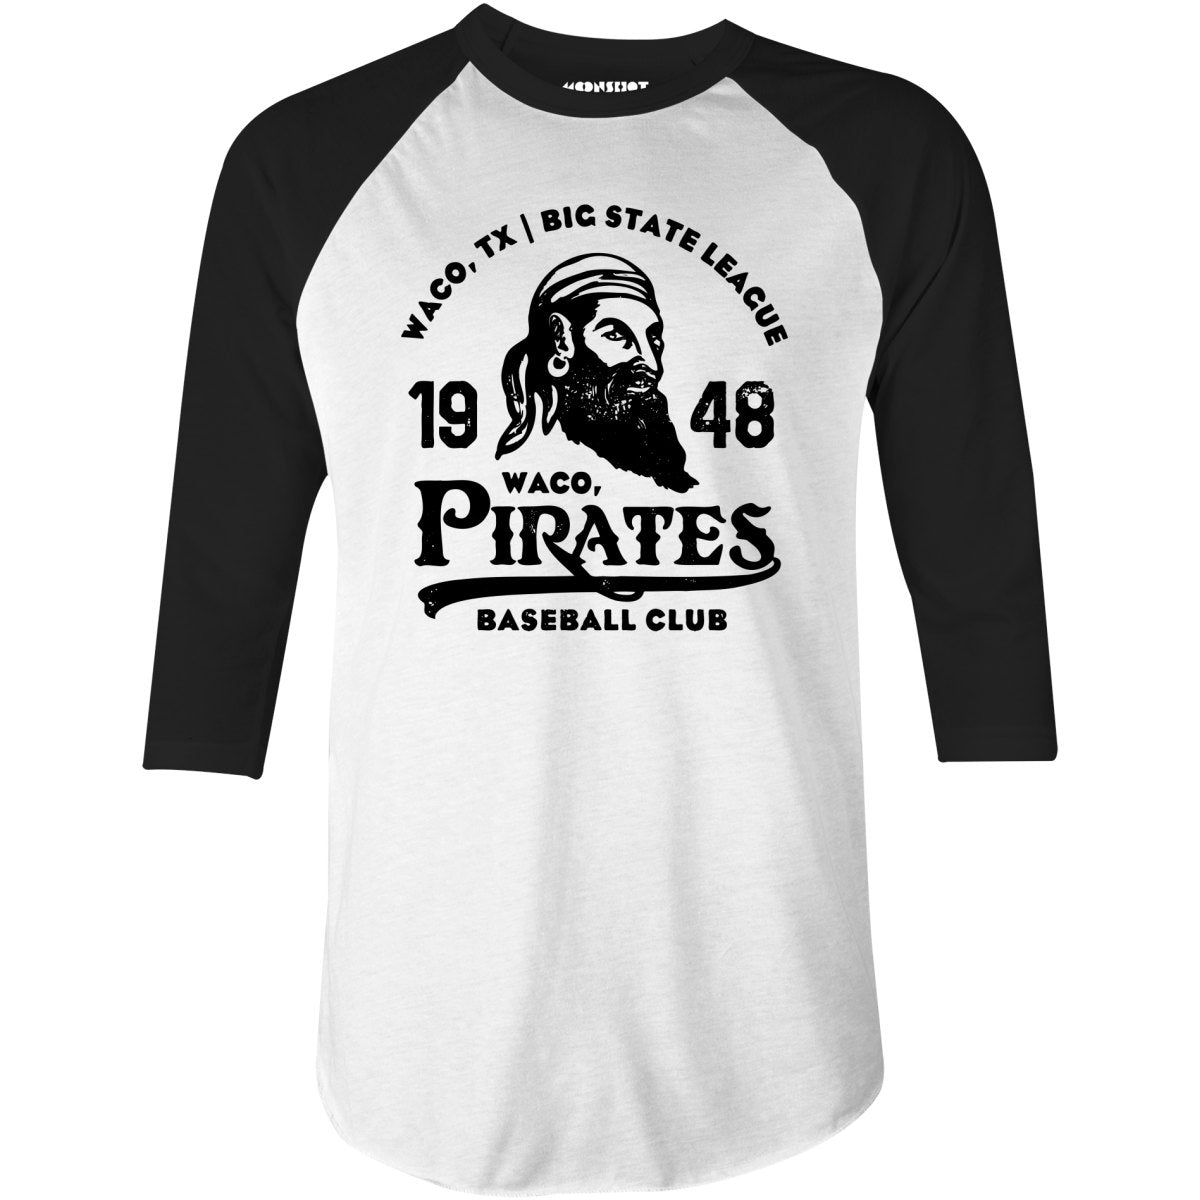 Waco Pirates - Texas - Vintage Defunct Baseball Teams - 3/4 Sleeve Raglan T-Shirt